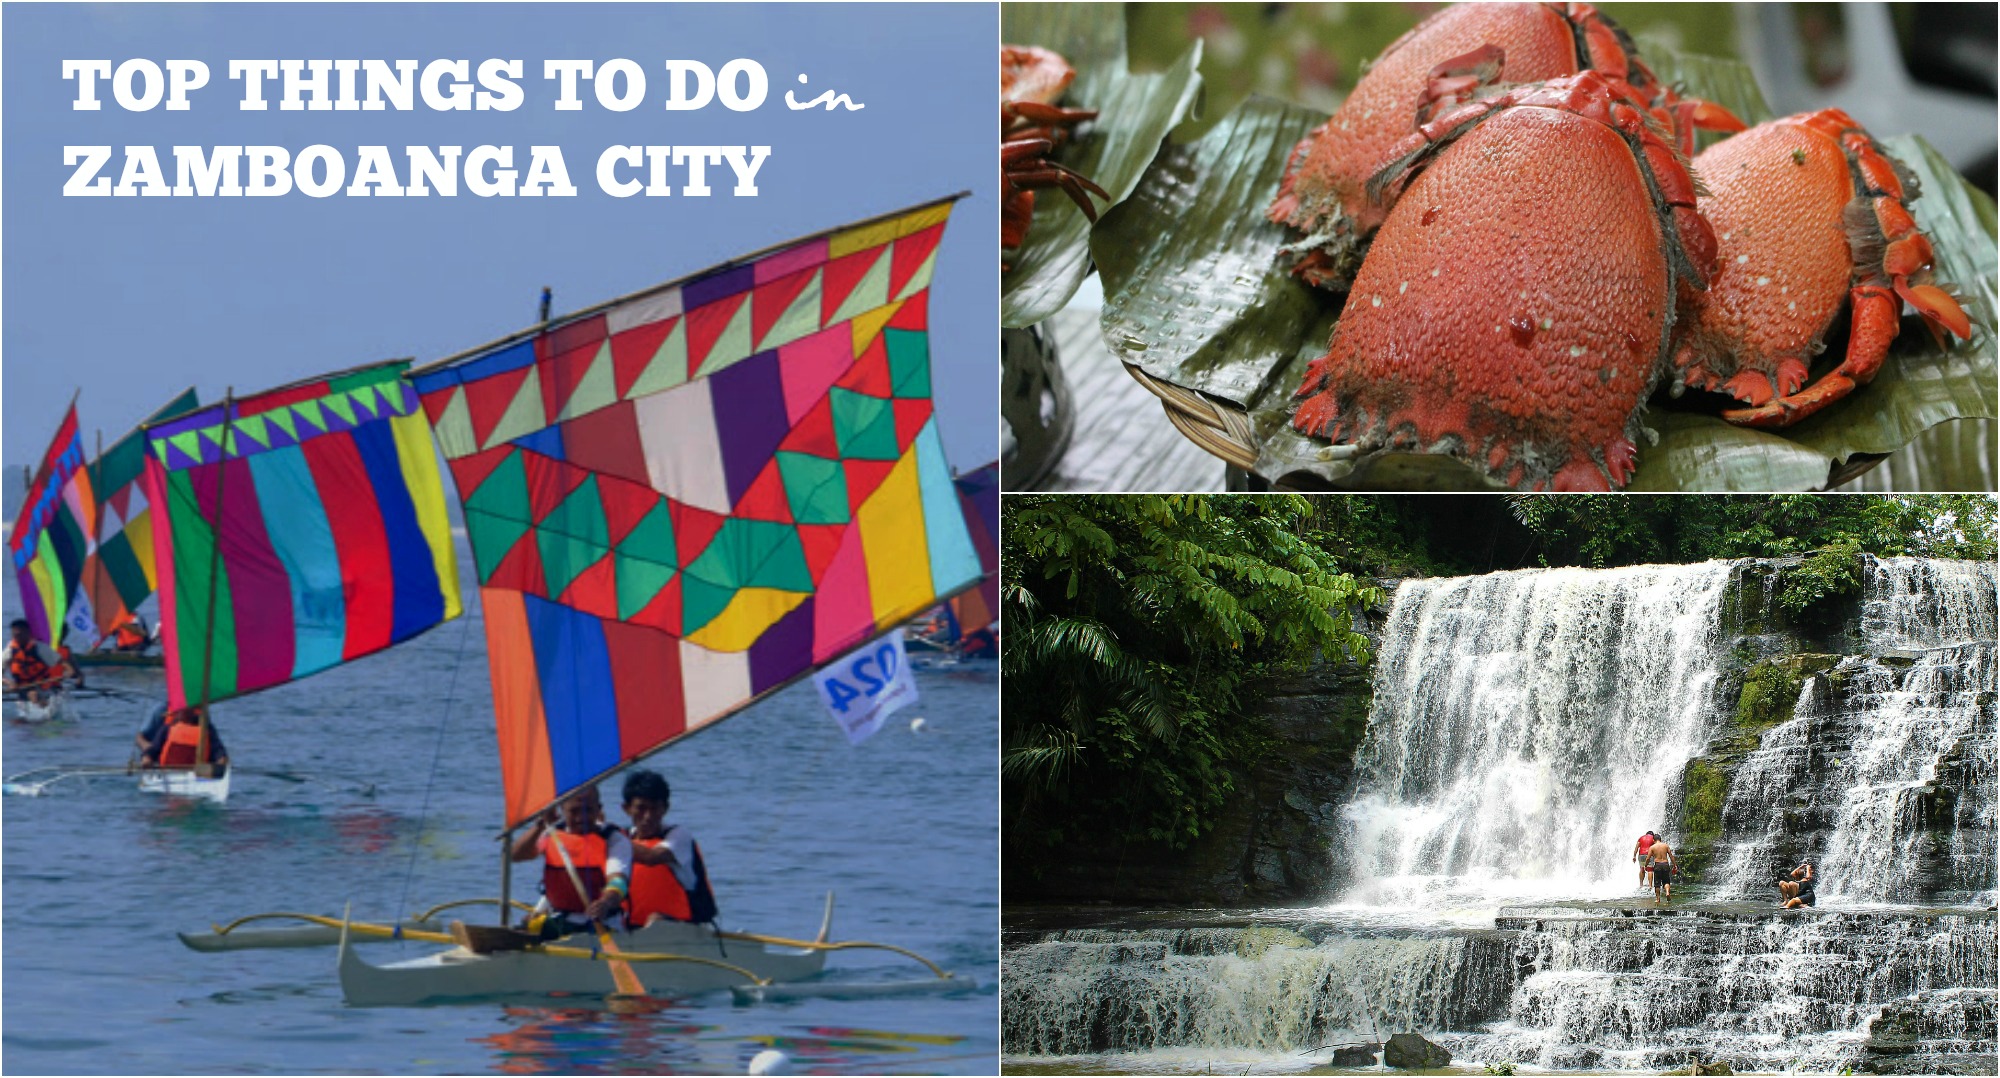 Things to do in Zamboanga City